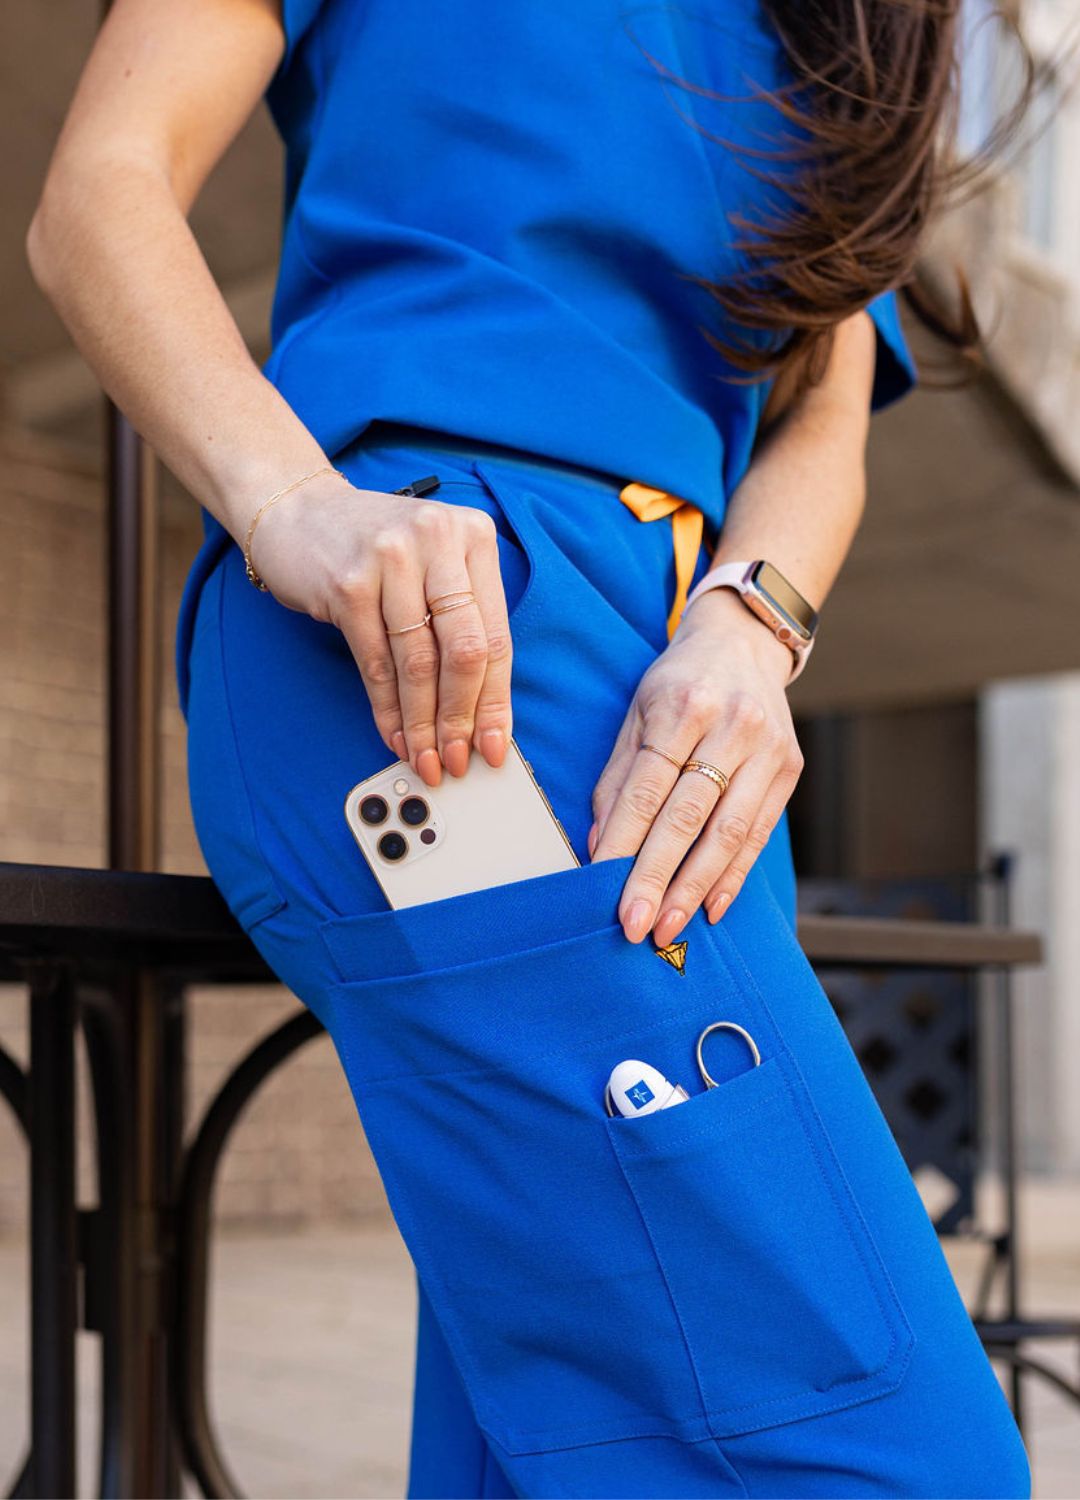 Poppy women's scrubs in blue have functional pockets.